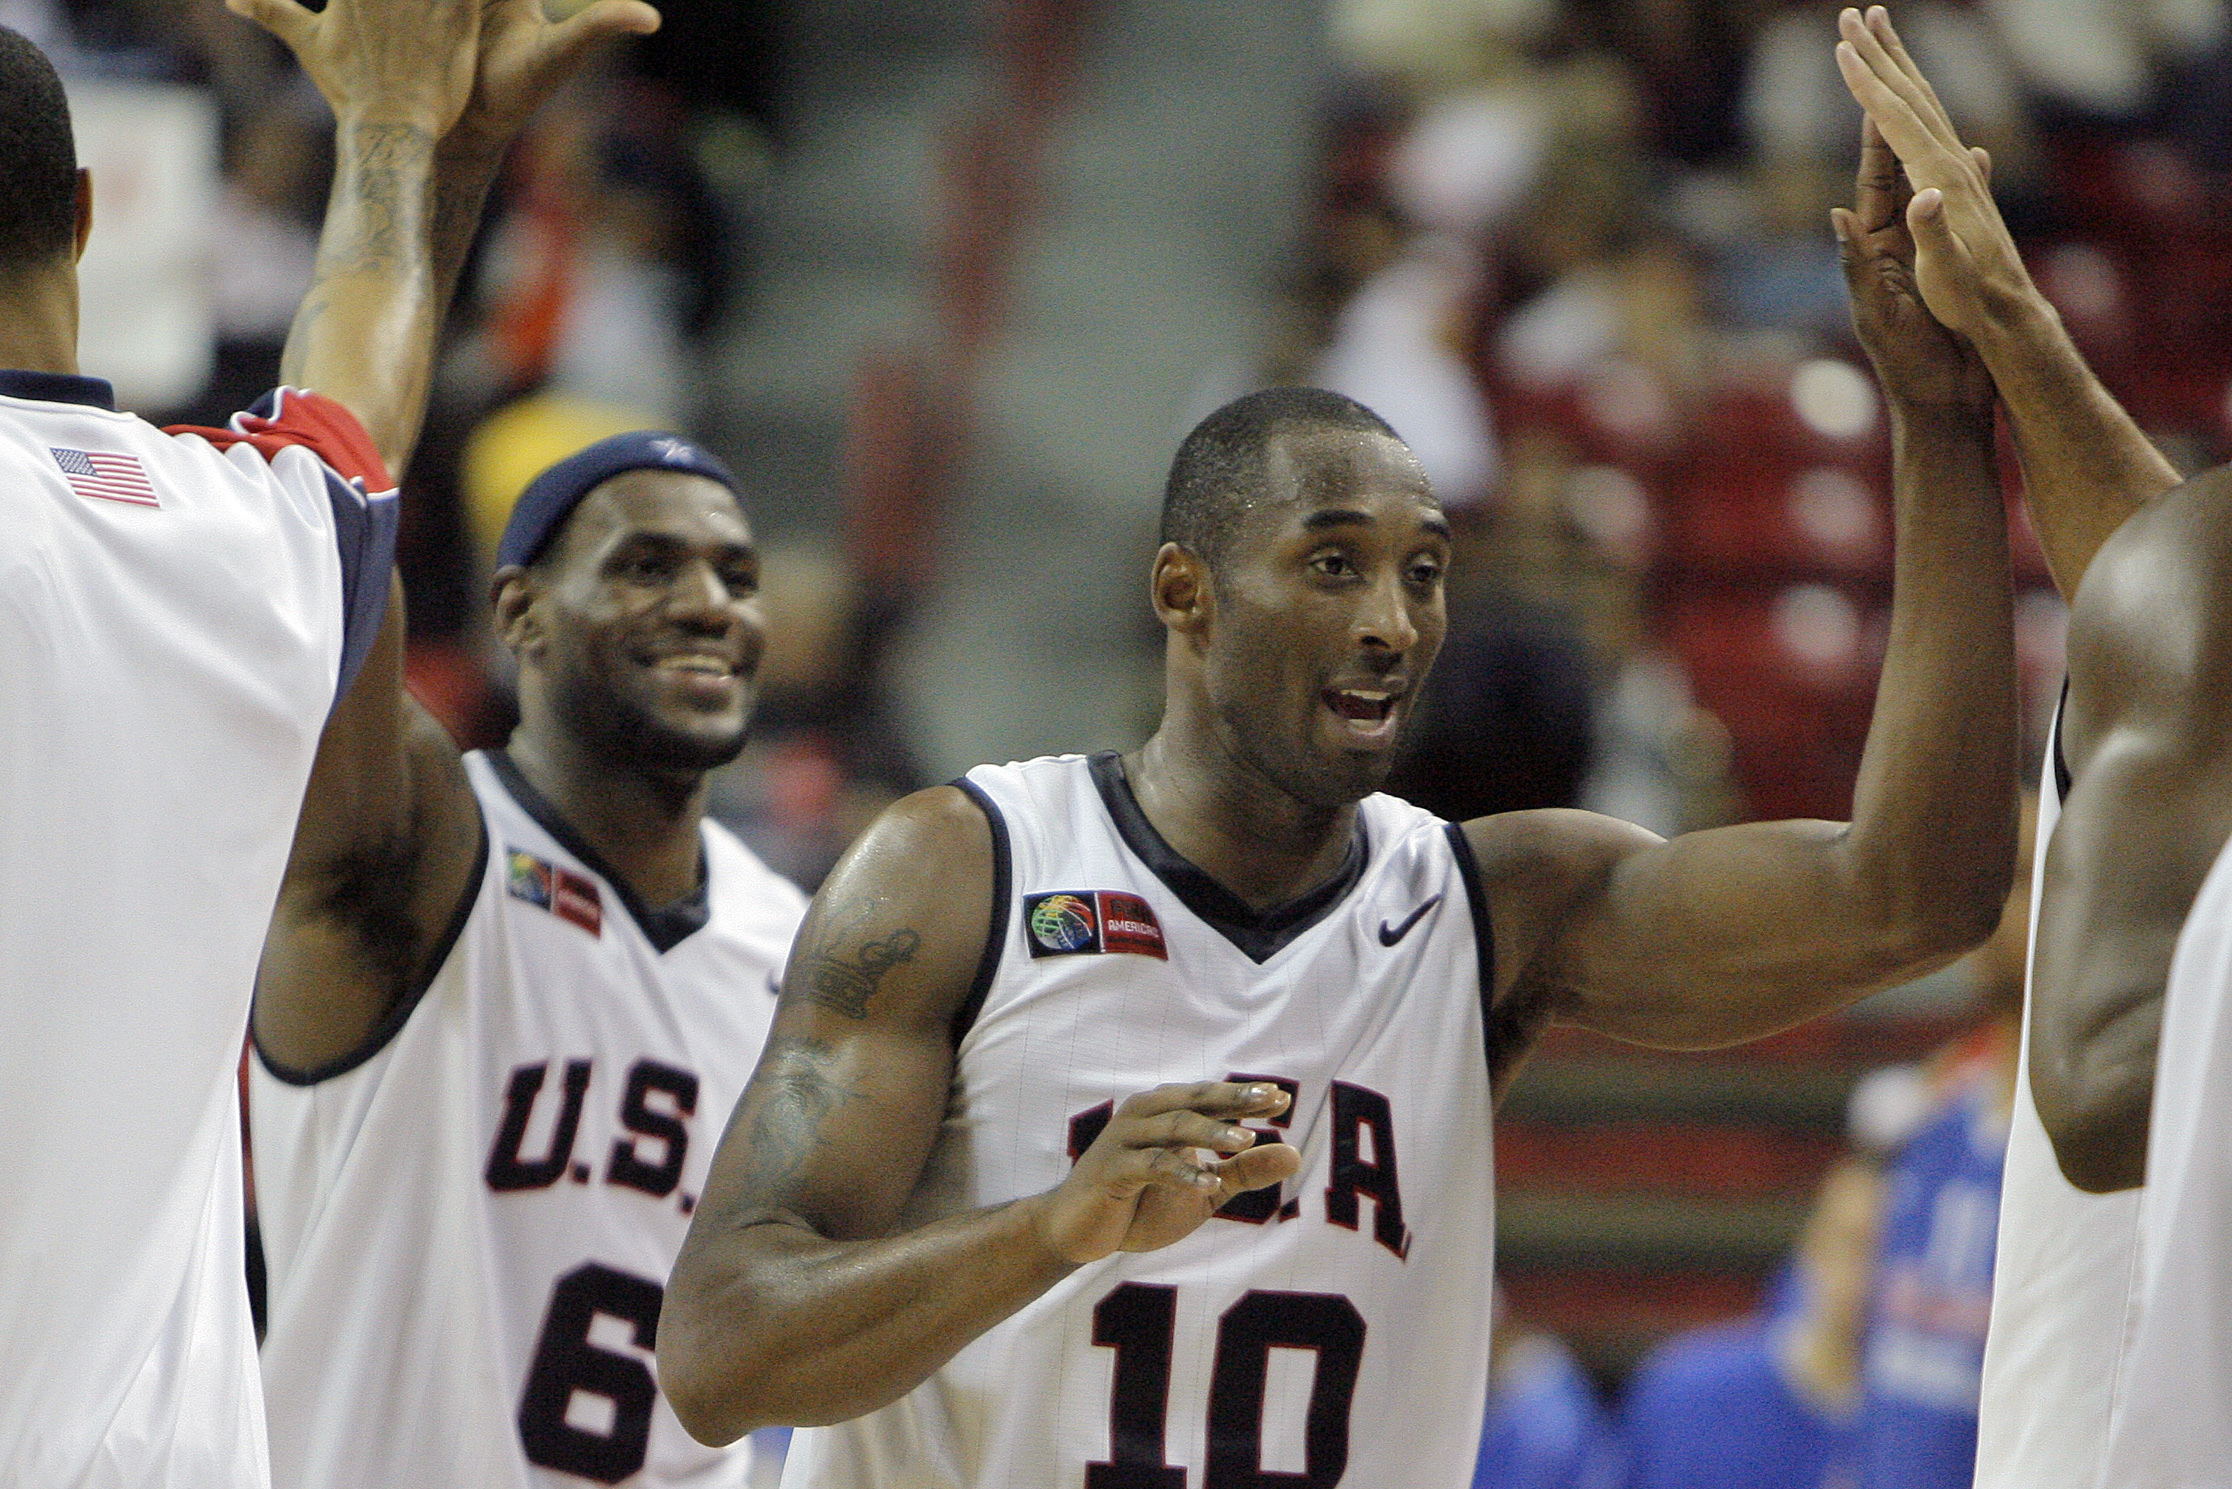 LeBron James, Kobe Bryant rejoin Team USA roster